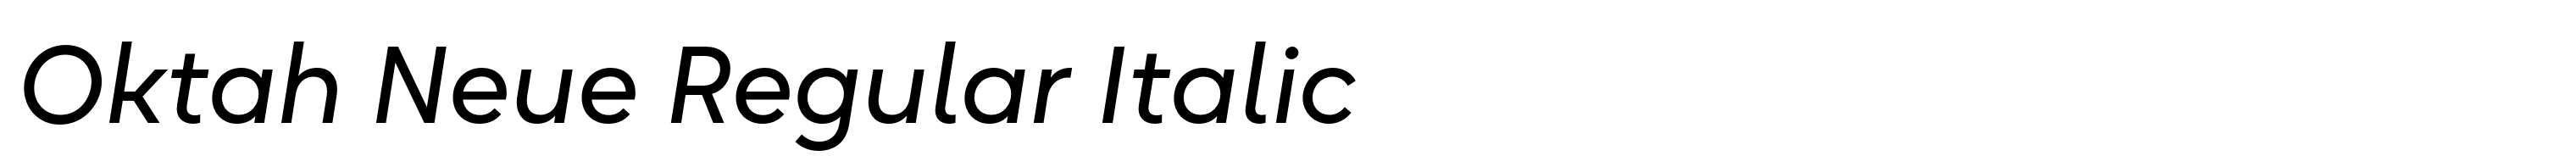 Oktah Neue Regular Italic